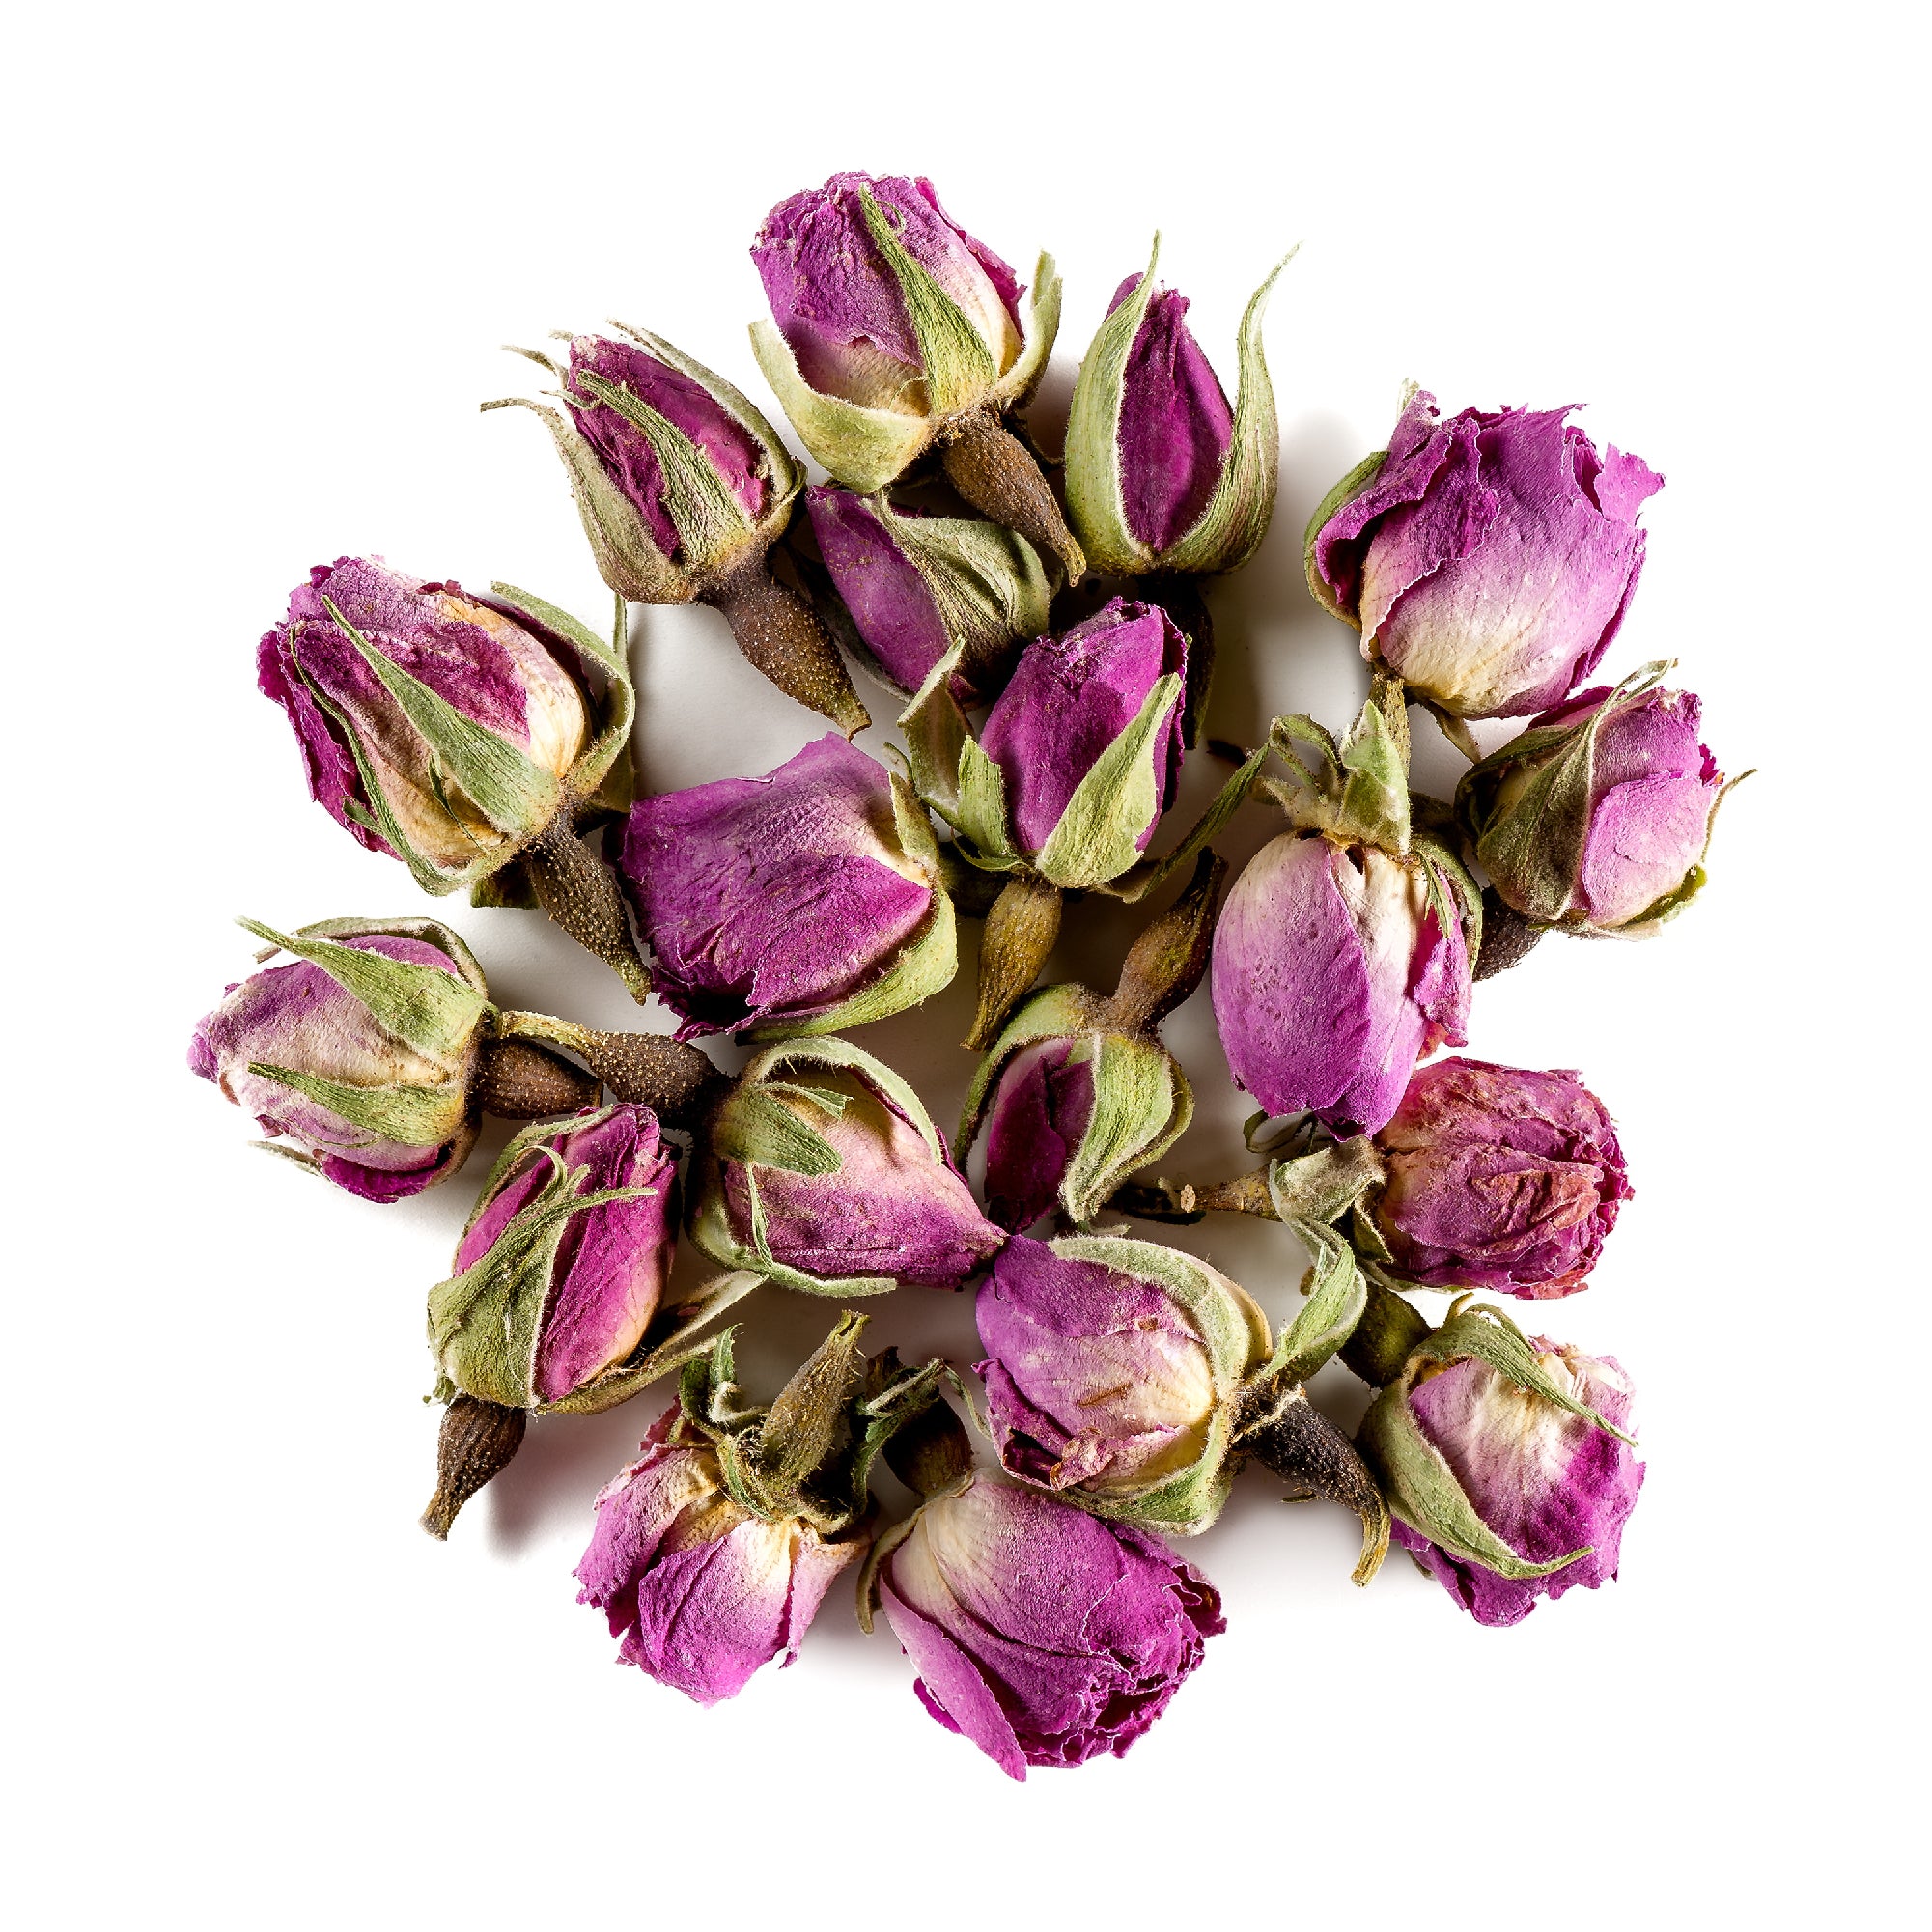 Damask Rose Bud Organic Quality - Dried Rosebud - Rosebud Edible Culinairy Food Grade 100g